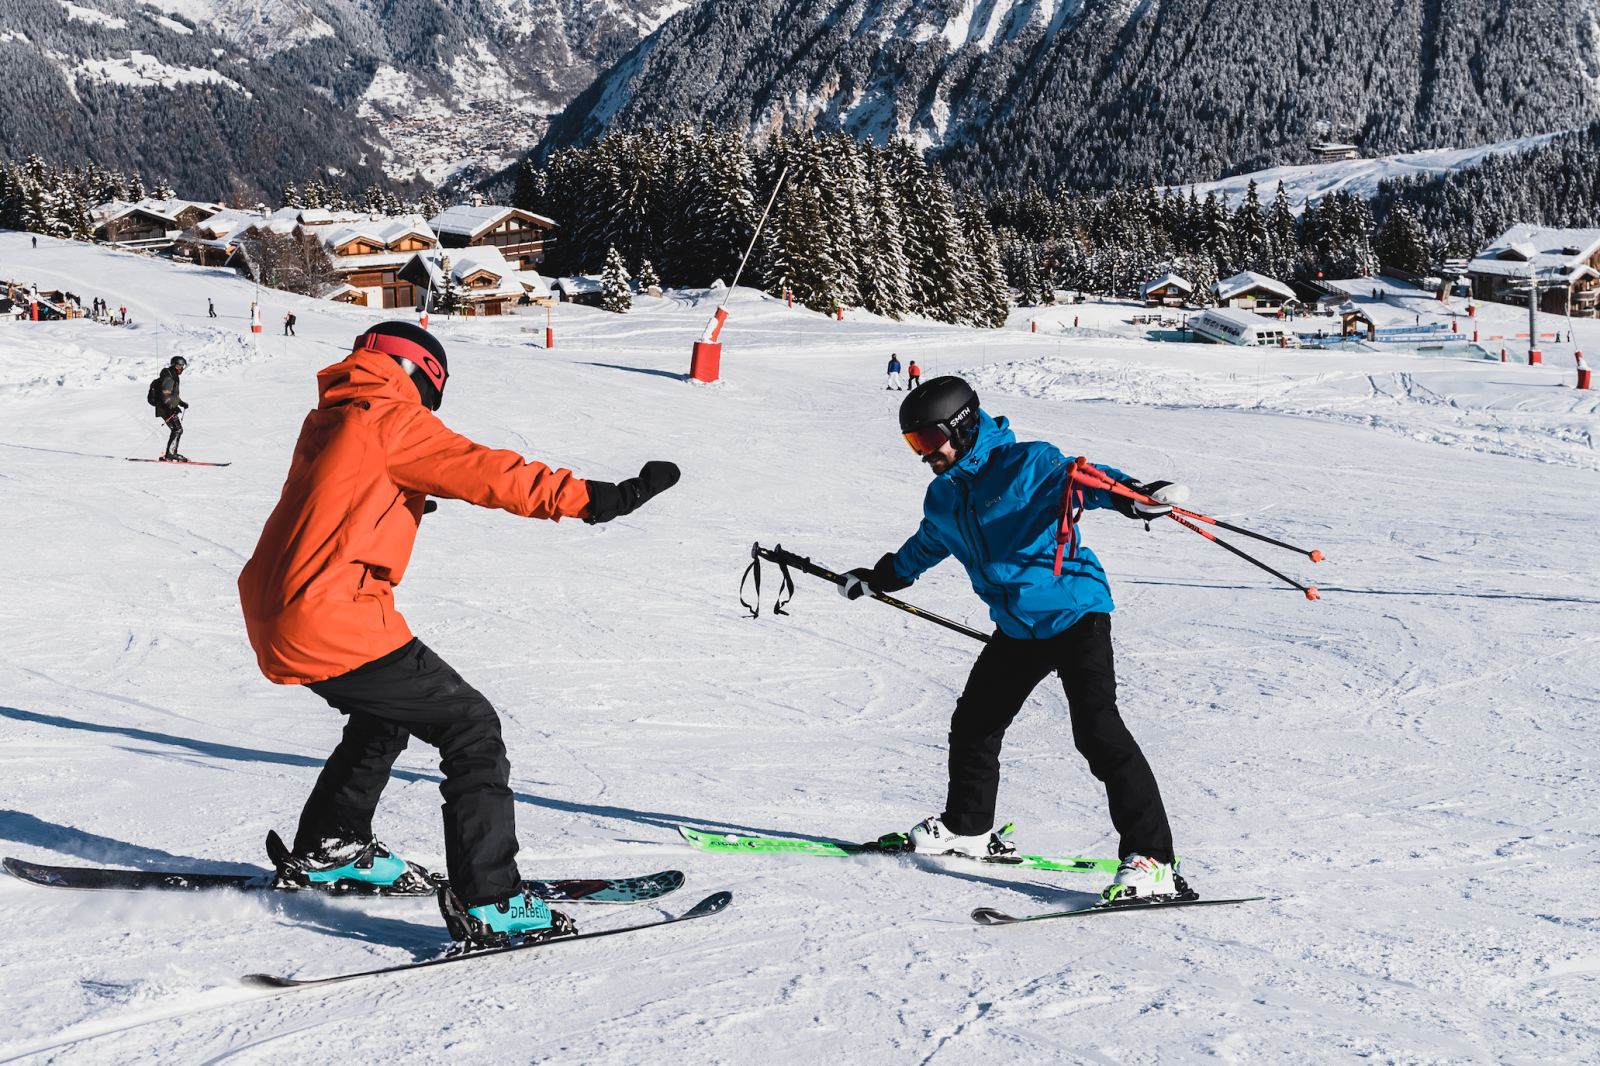 Top 5 Ski Resorts in France for Beginner Skiing